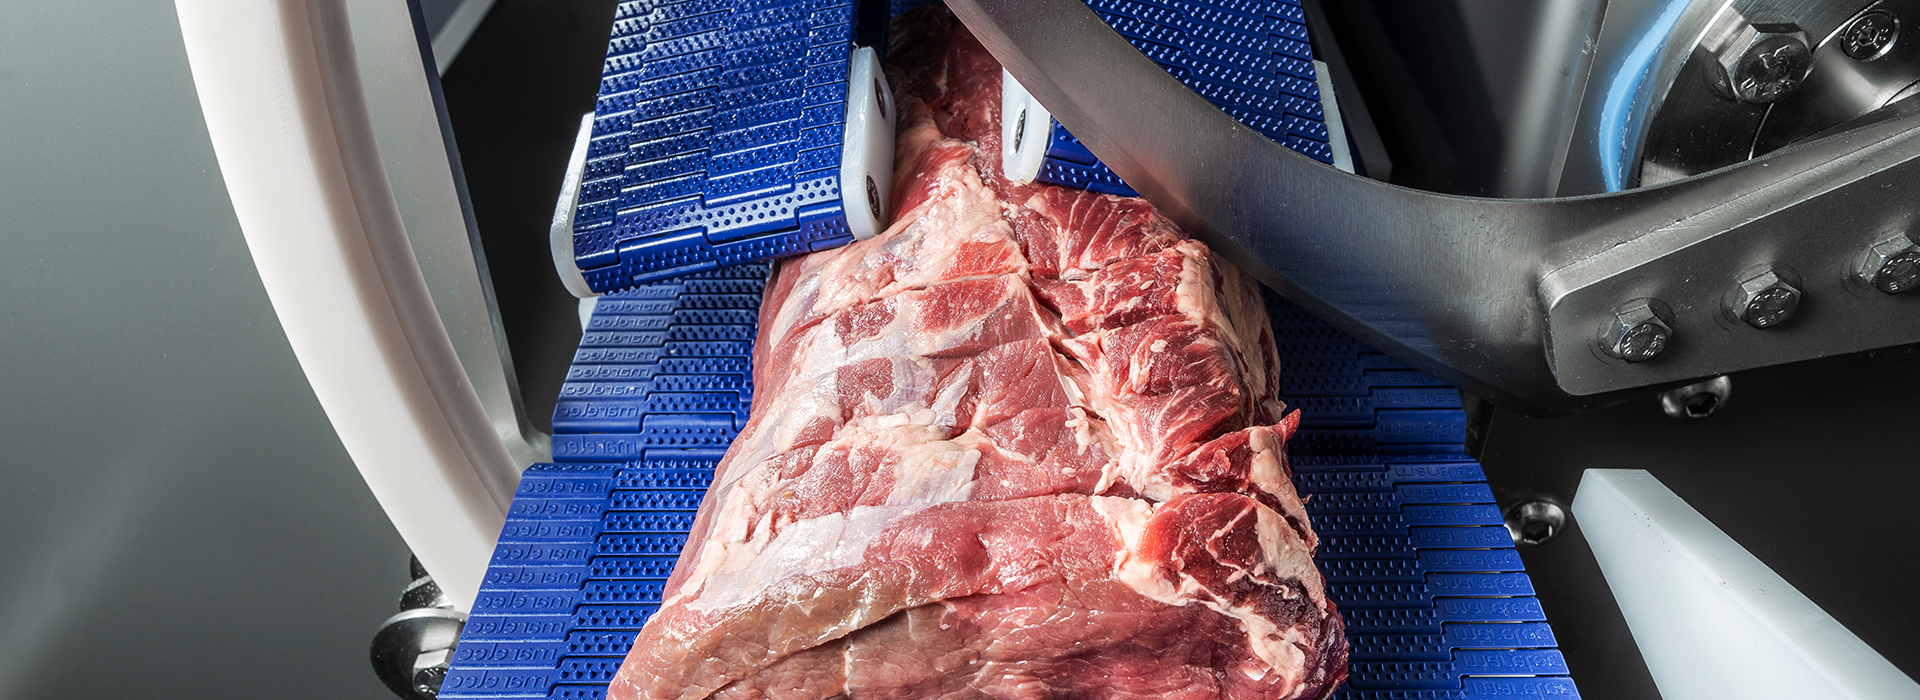 Portion cutter PORTIO 3D for cutting rounded meat such as steaks, strip loin, rib eye, tenderloin, pork loins, etc